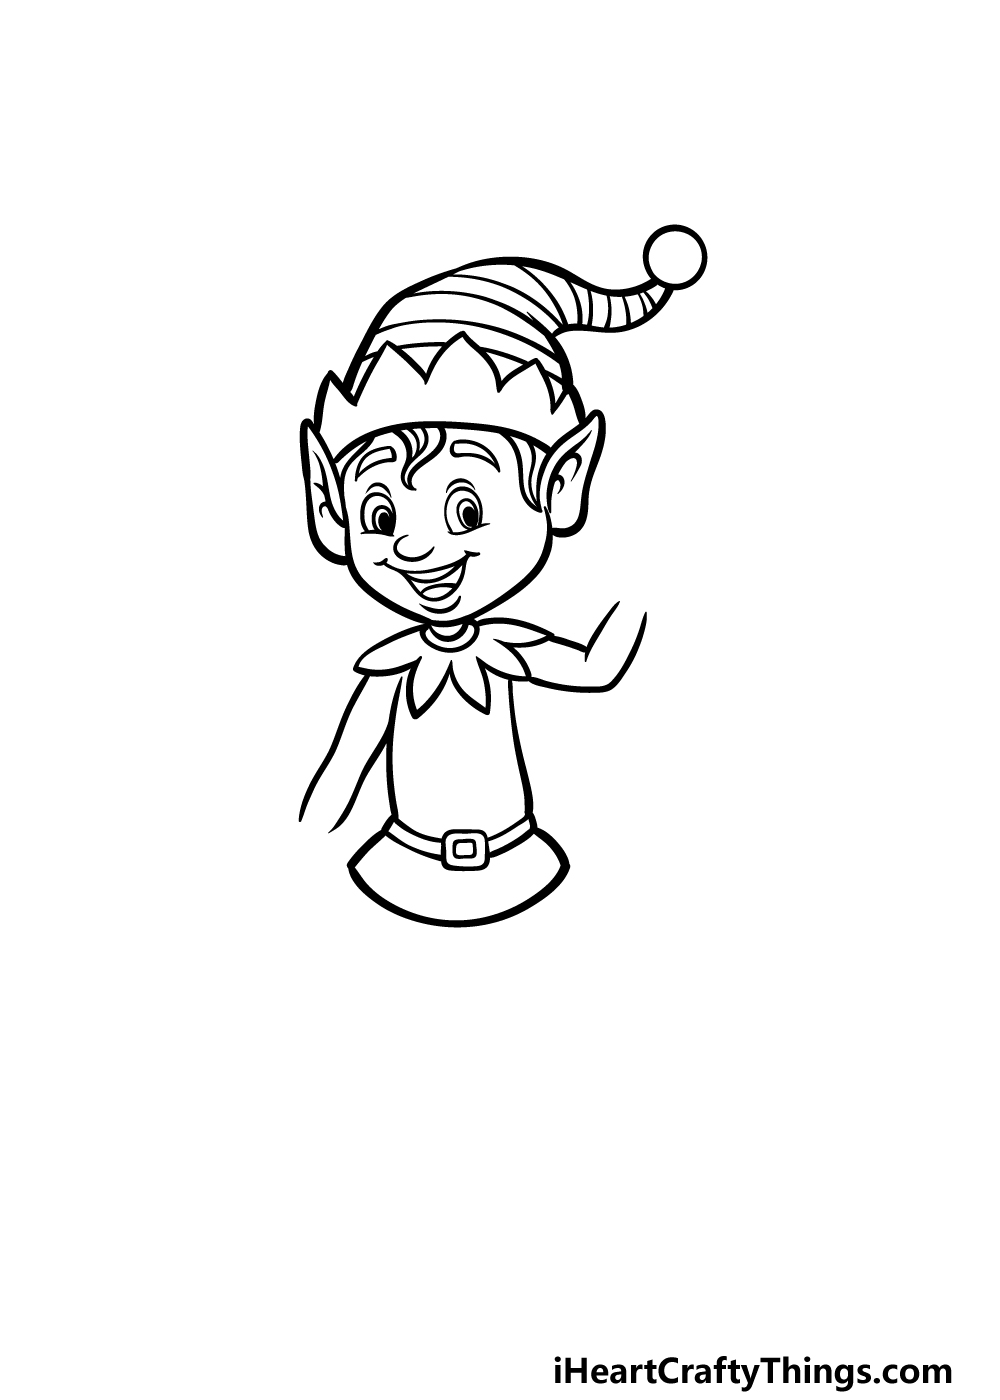 Cartoon Elf Drawing - How To Draw A Cartoon Elf Step By Step